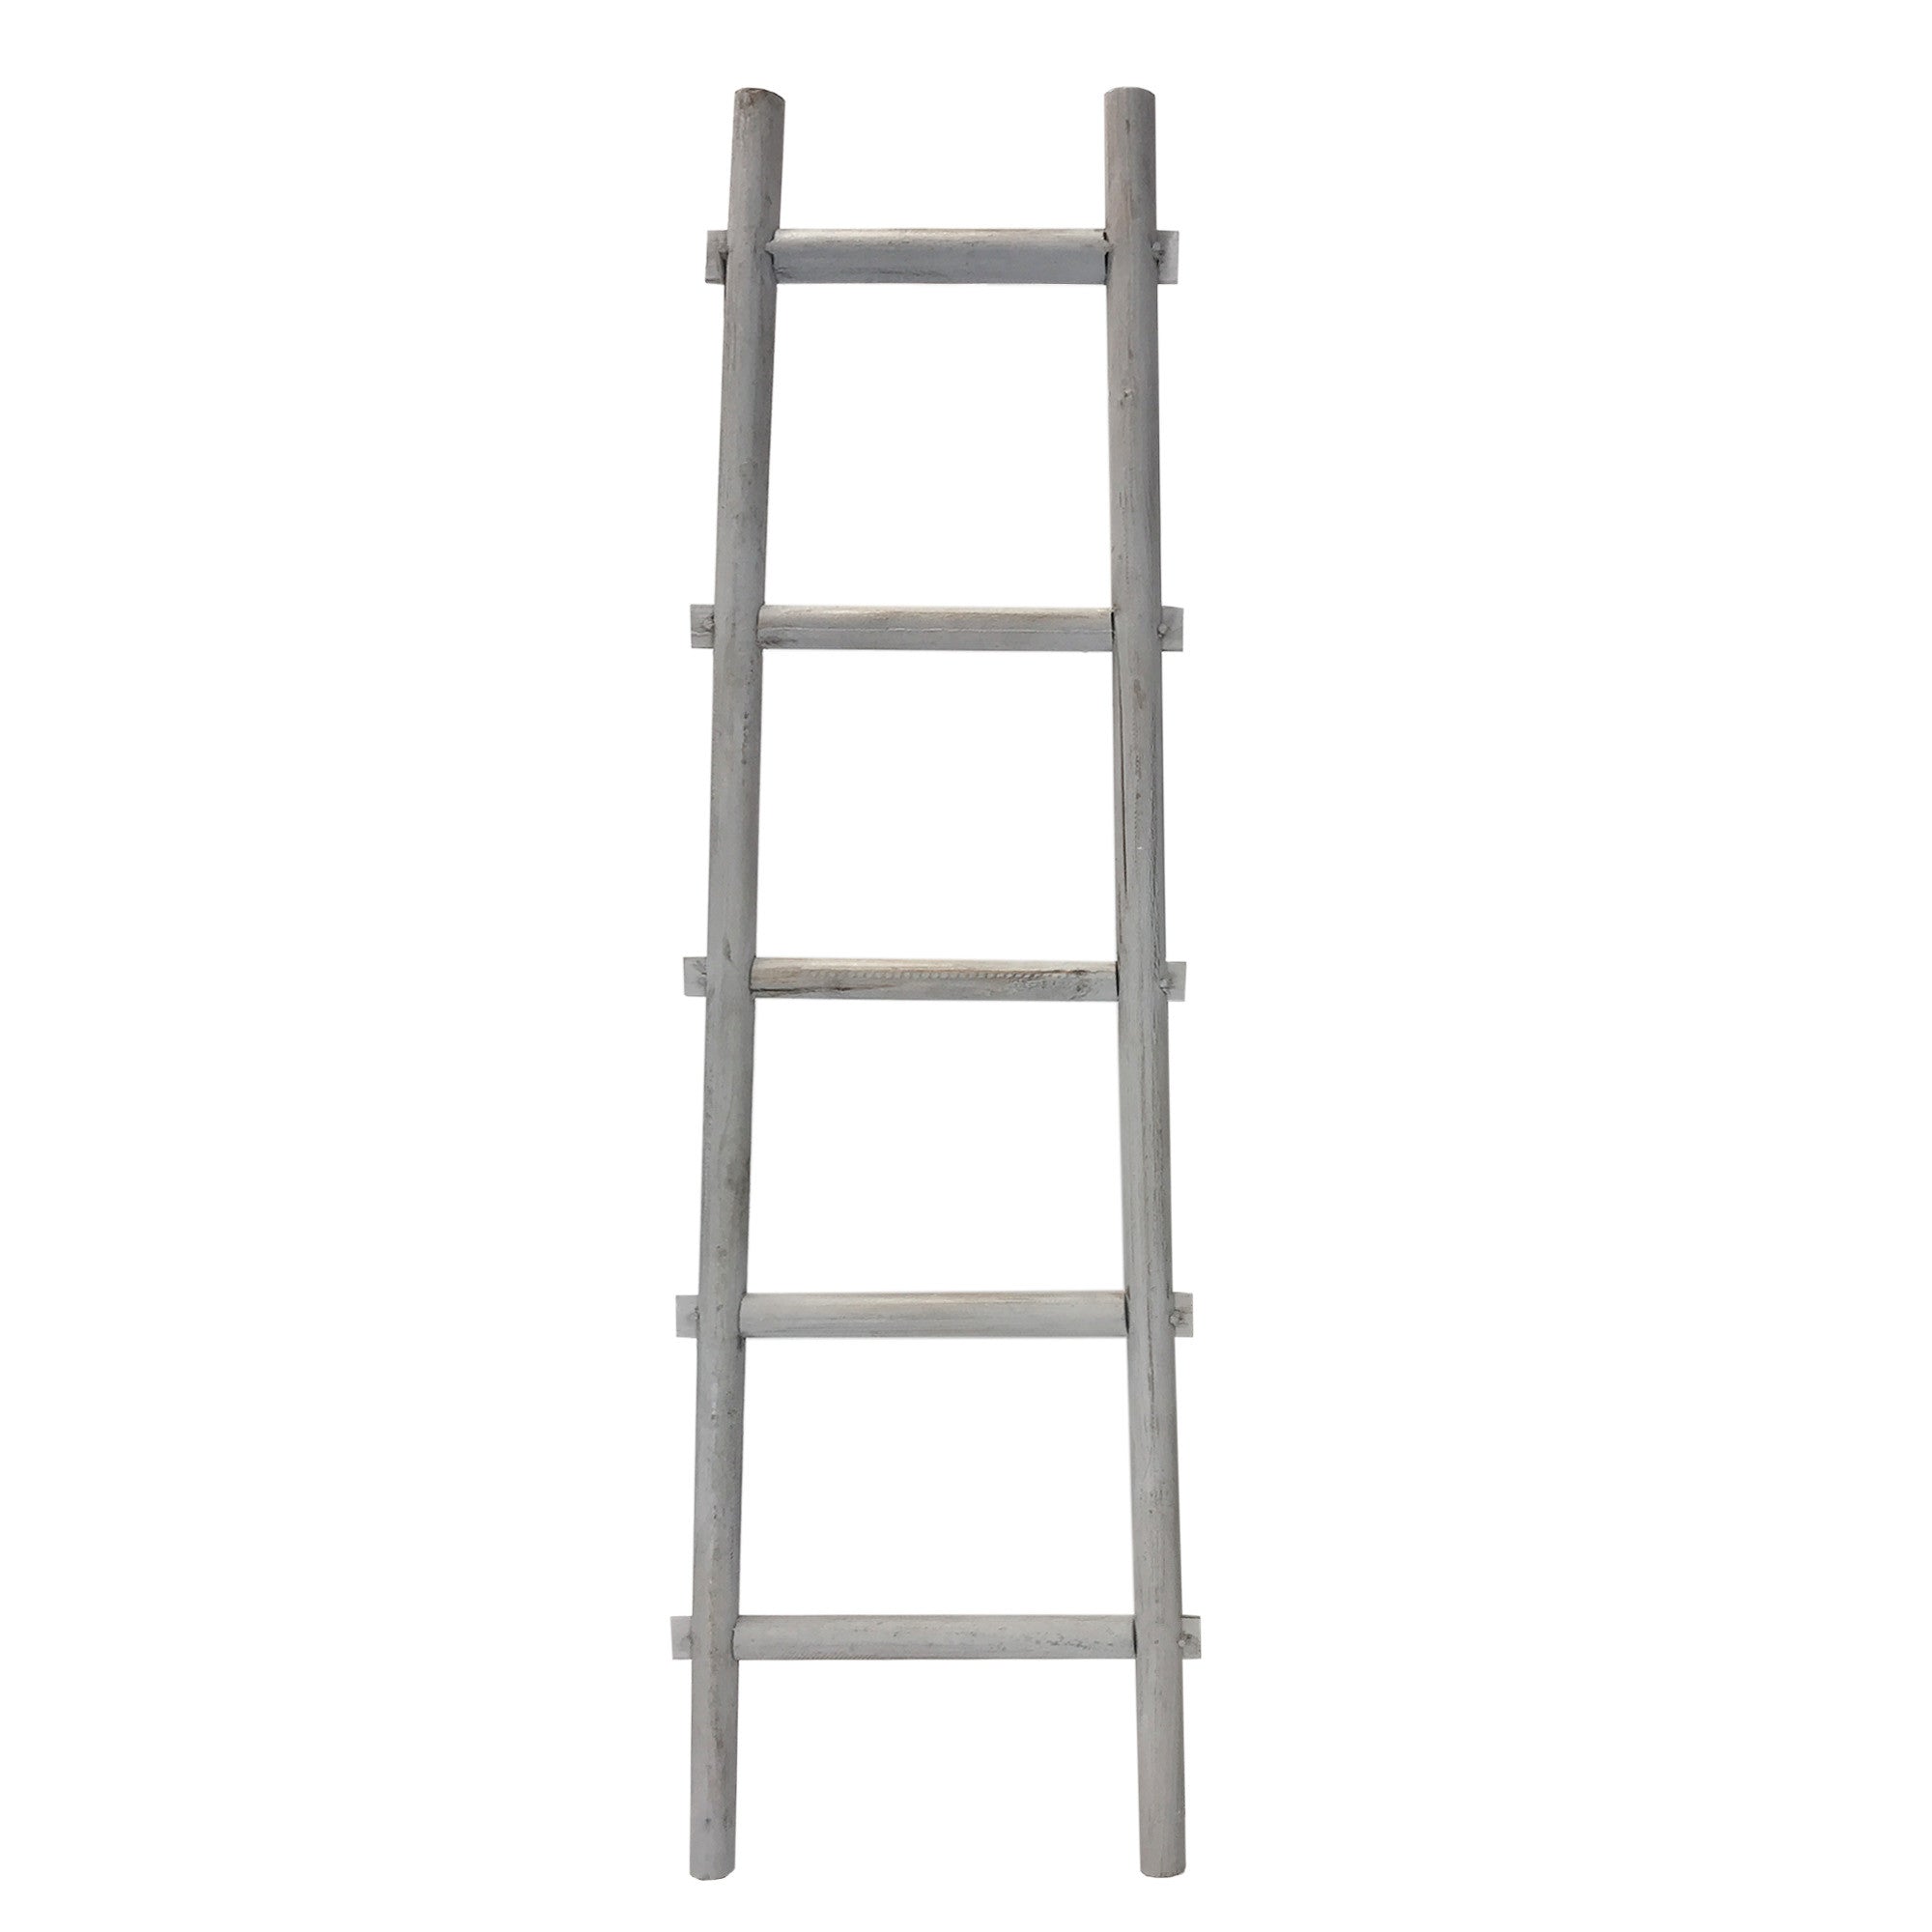 59" X 18" X 2" Grey Decorative Ladder Shelve